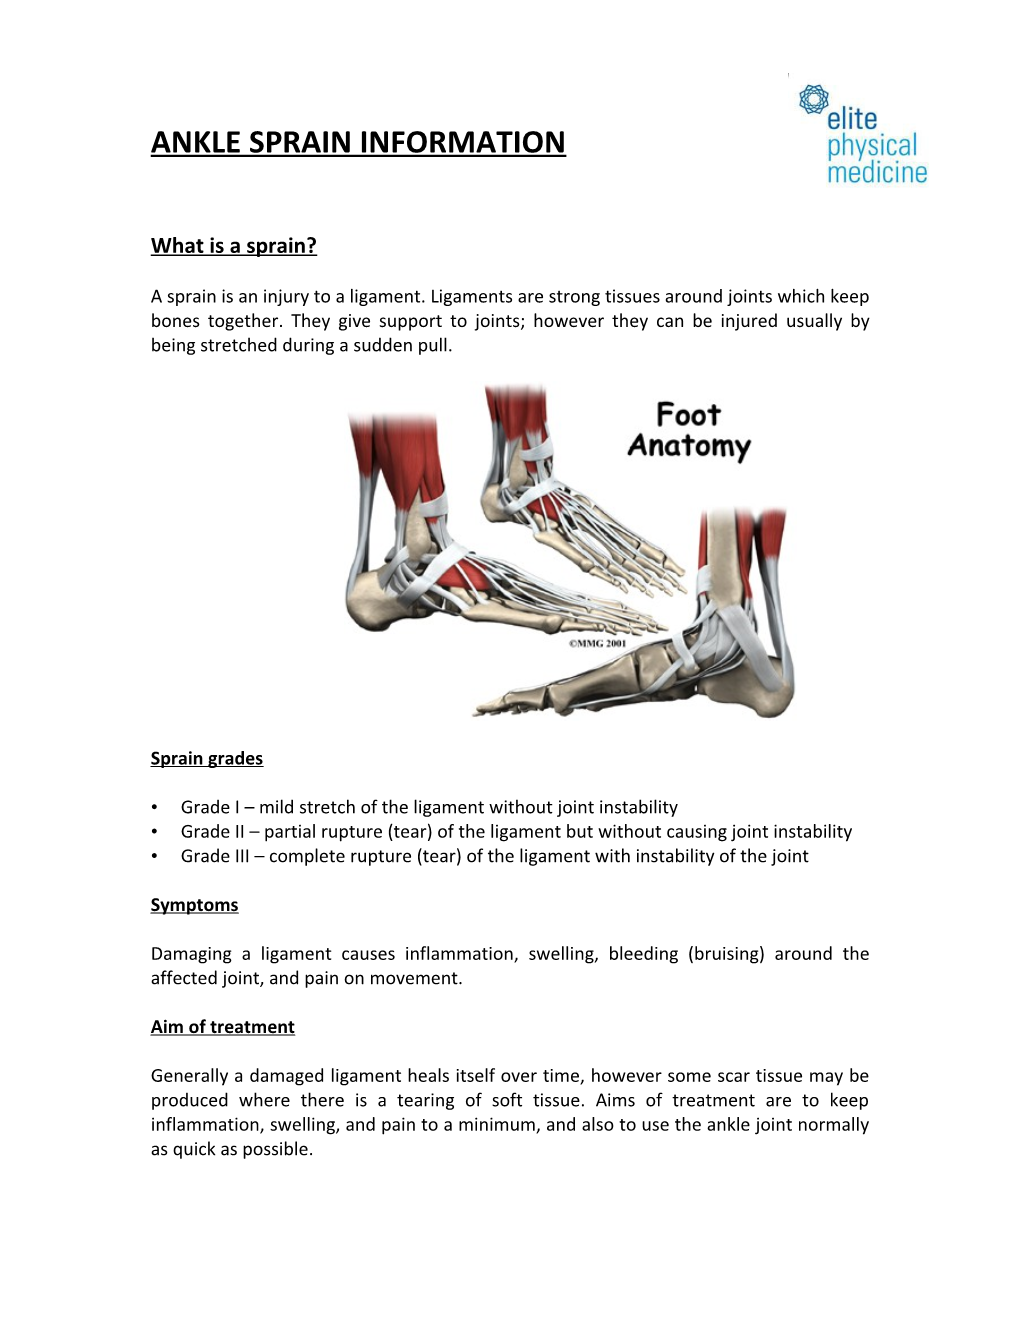 Ankle Sprains Information Sheet